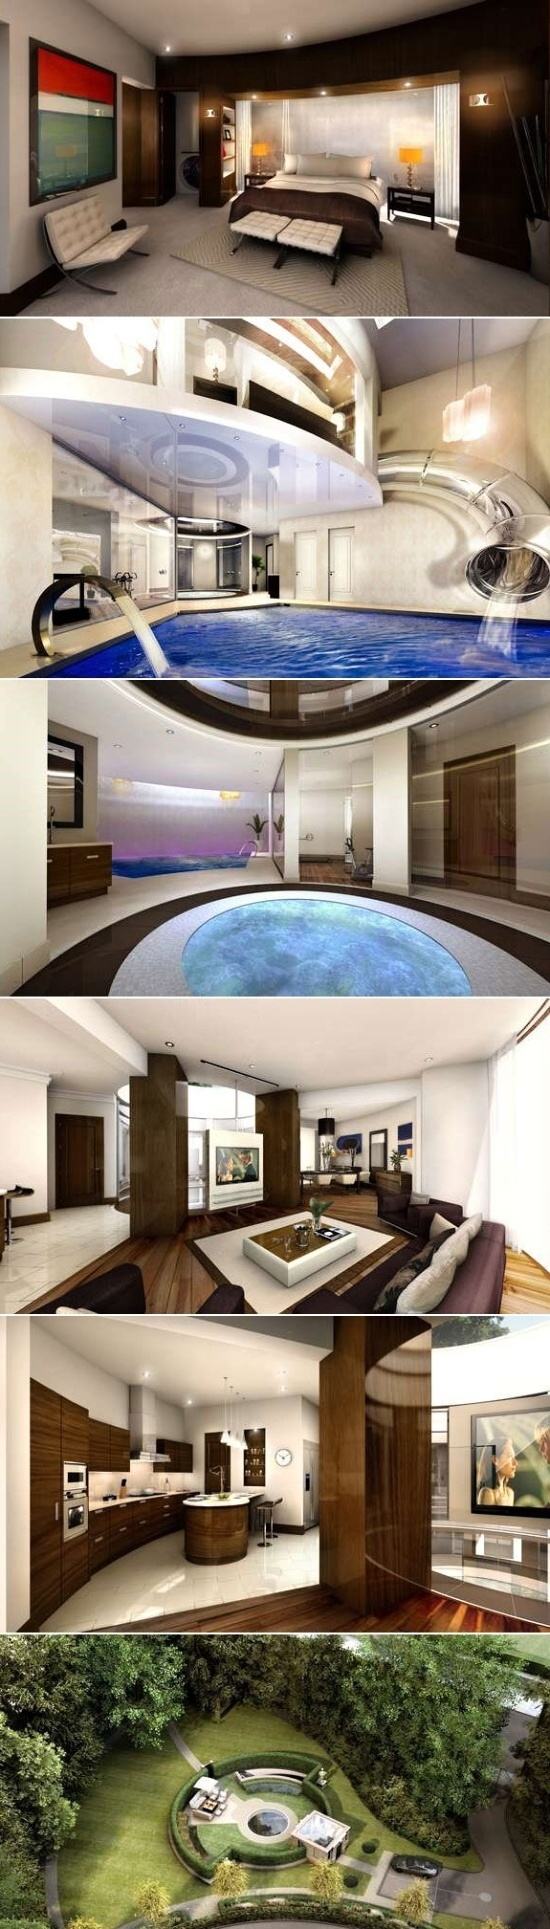 Obrázek Slide from bedroom to pool - subterranean mansion